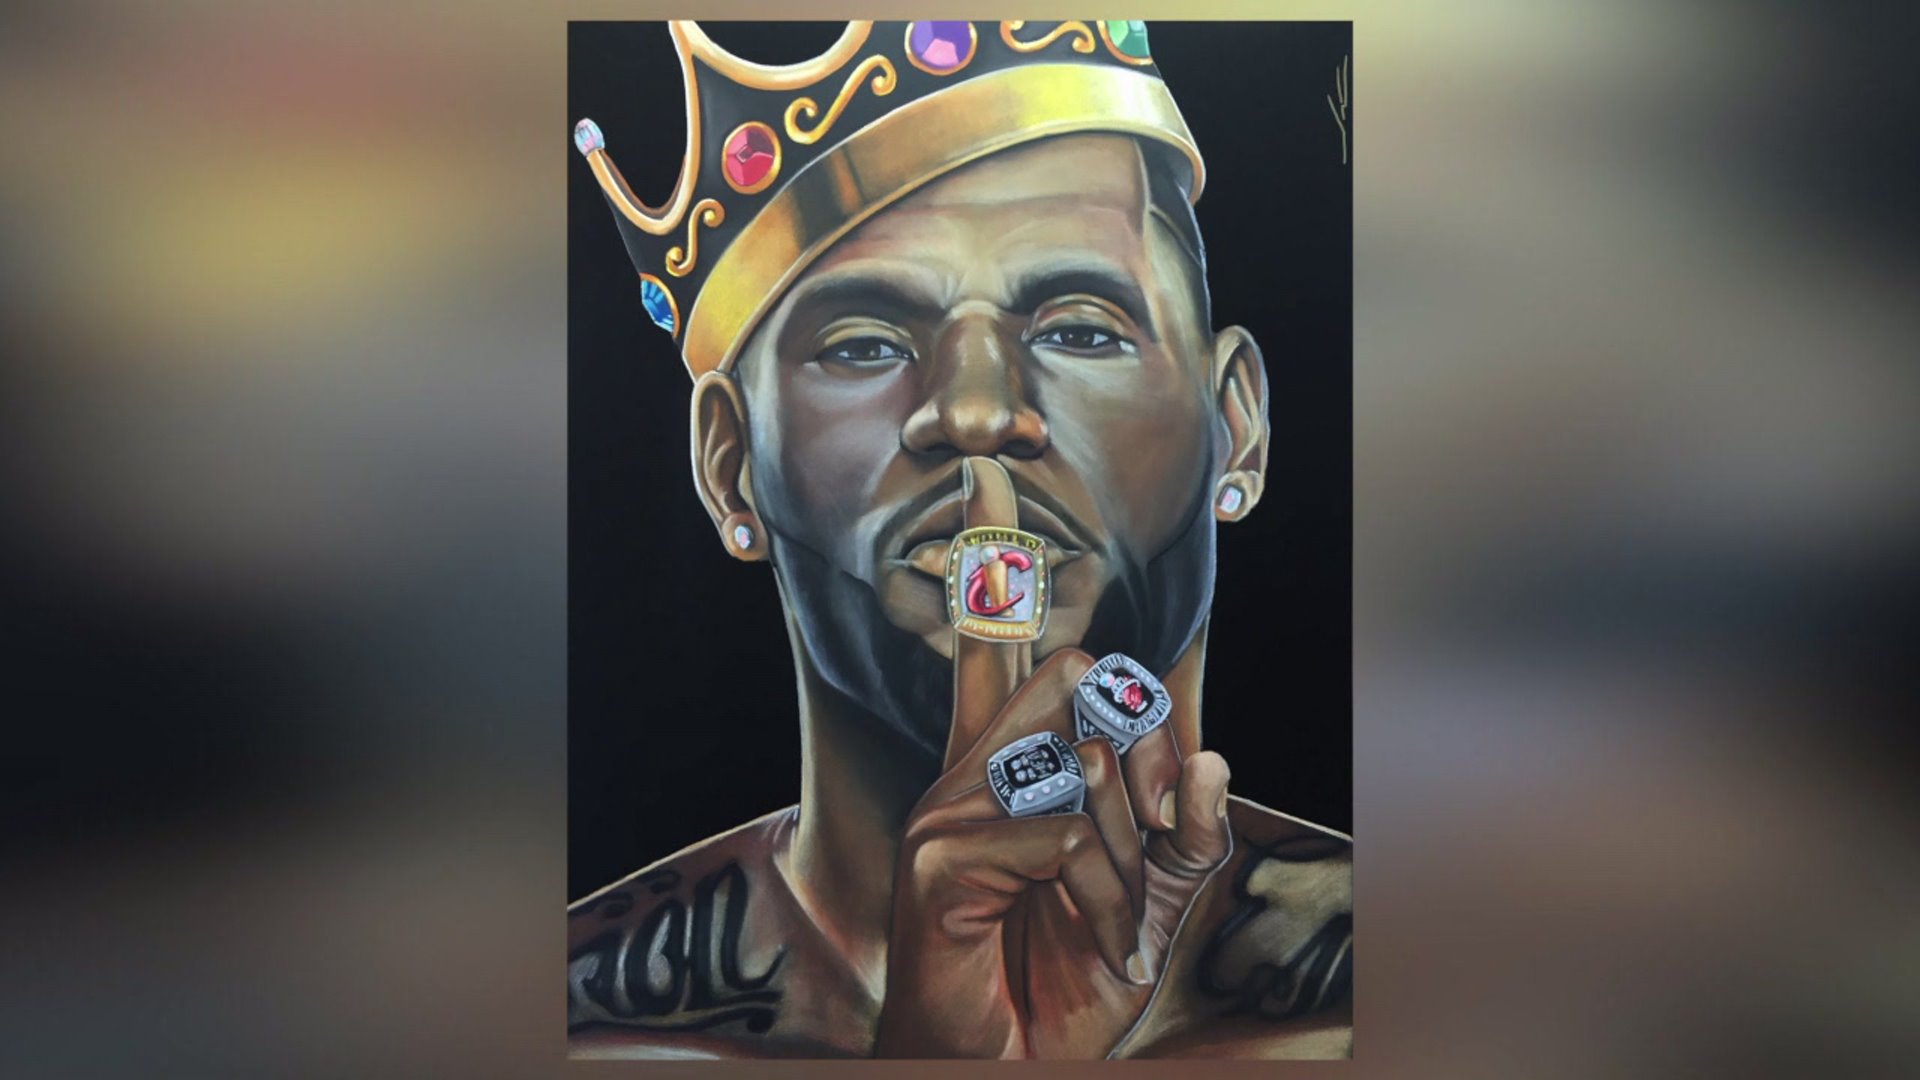 Pako Pablos painting of LeBron James